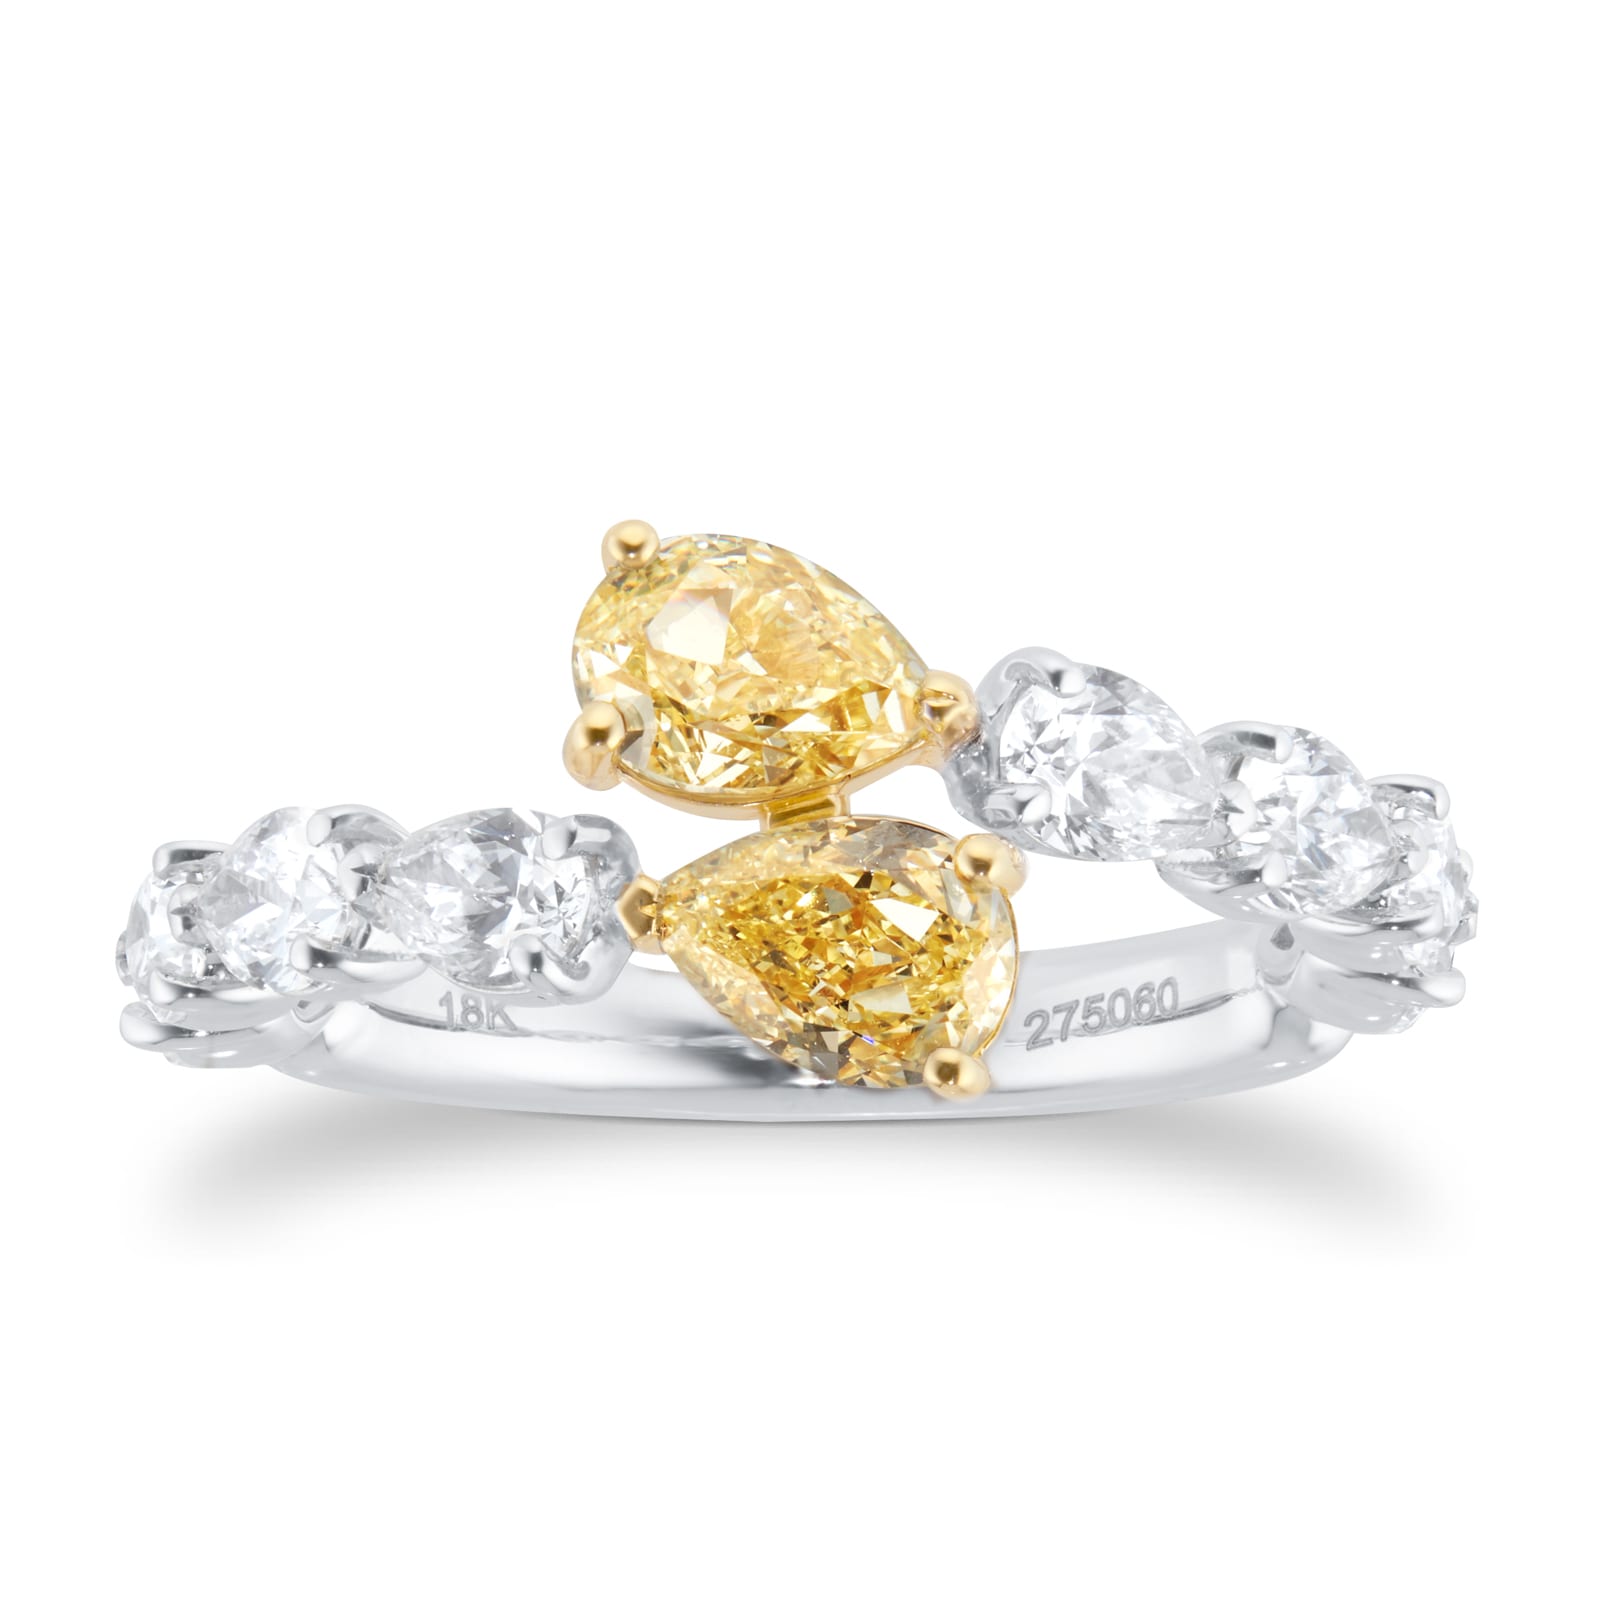 18ct Yellow & White Pear Cut Diamond Ring - Ring Size I